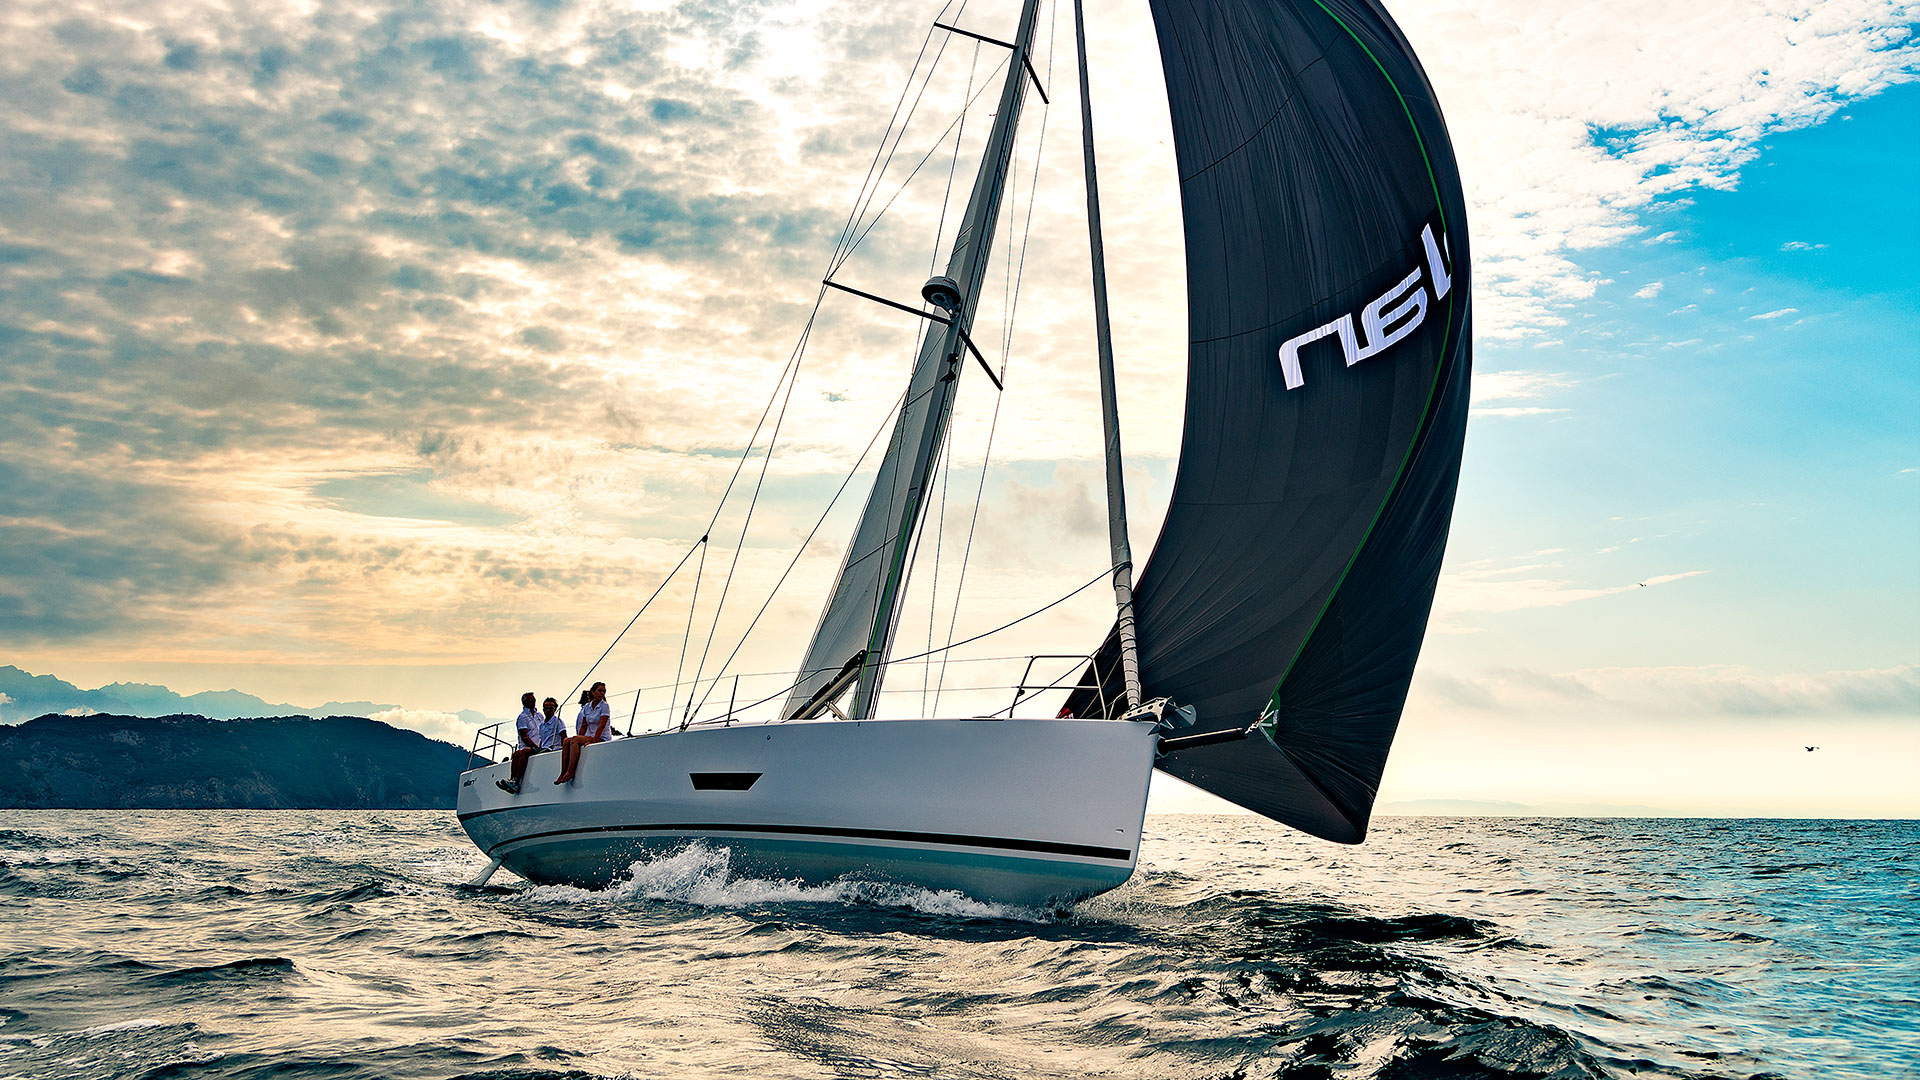 elan-yachts-e5-performance-cruiser-downwind-sailing